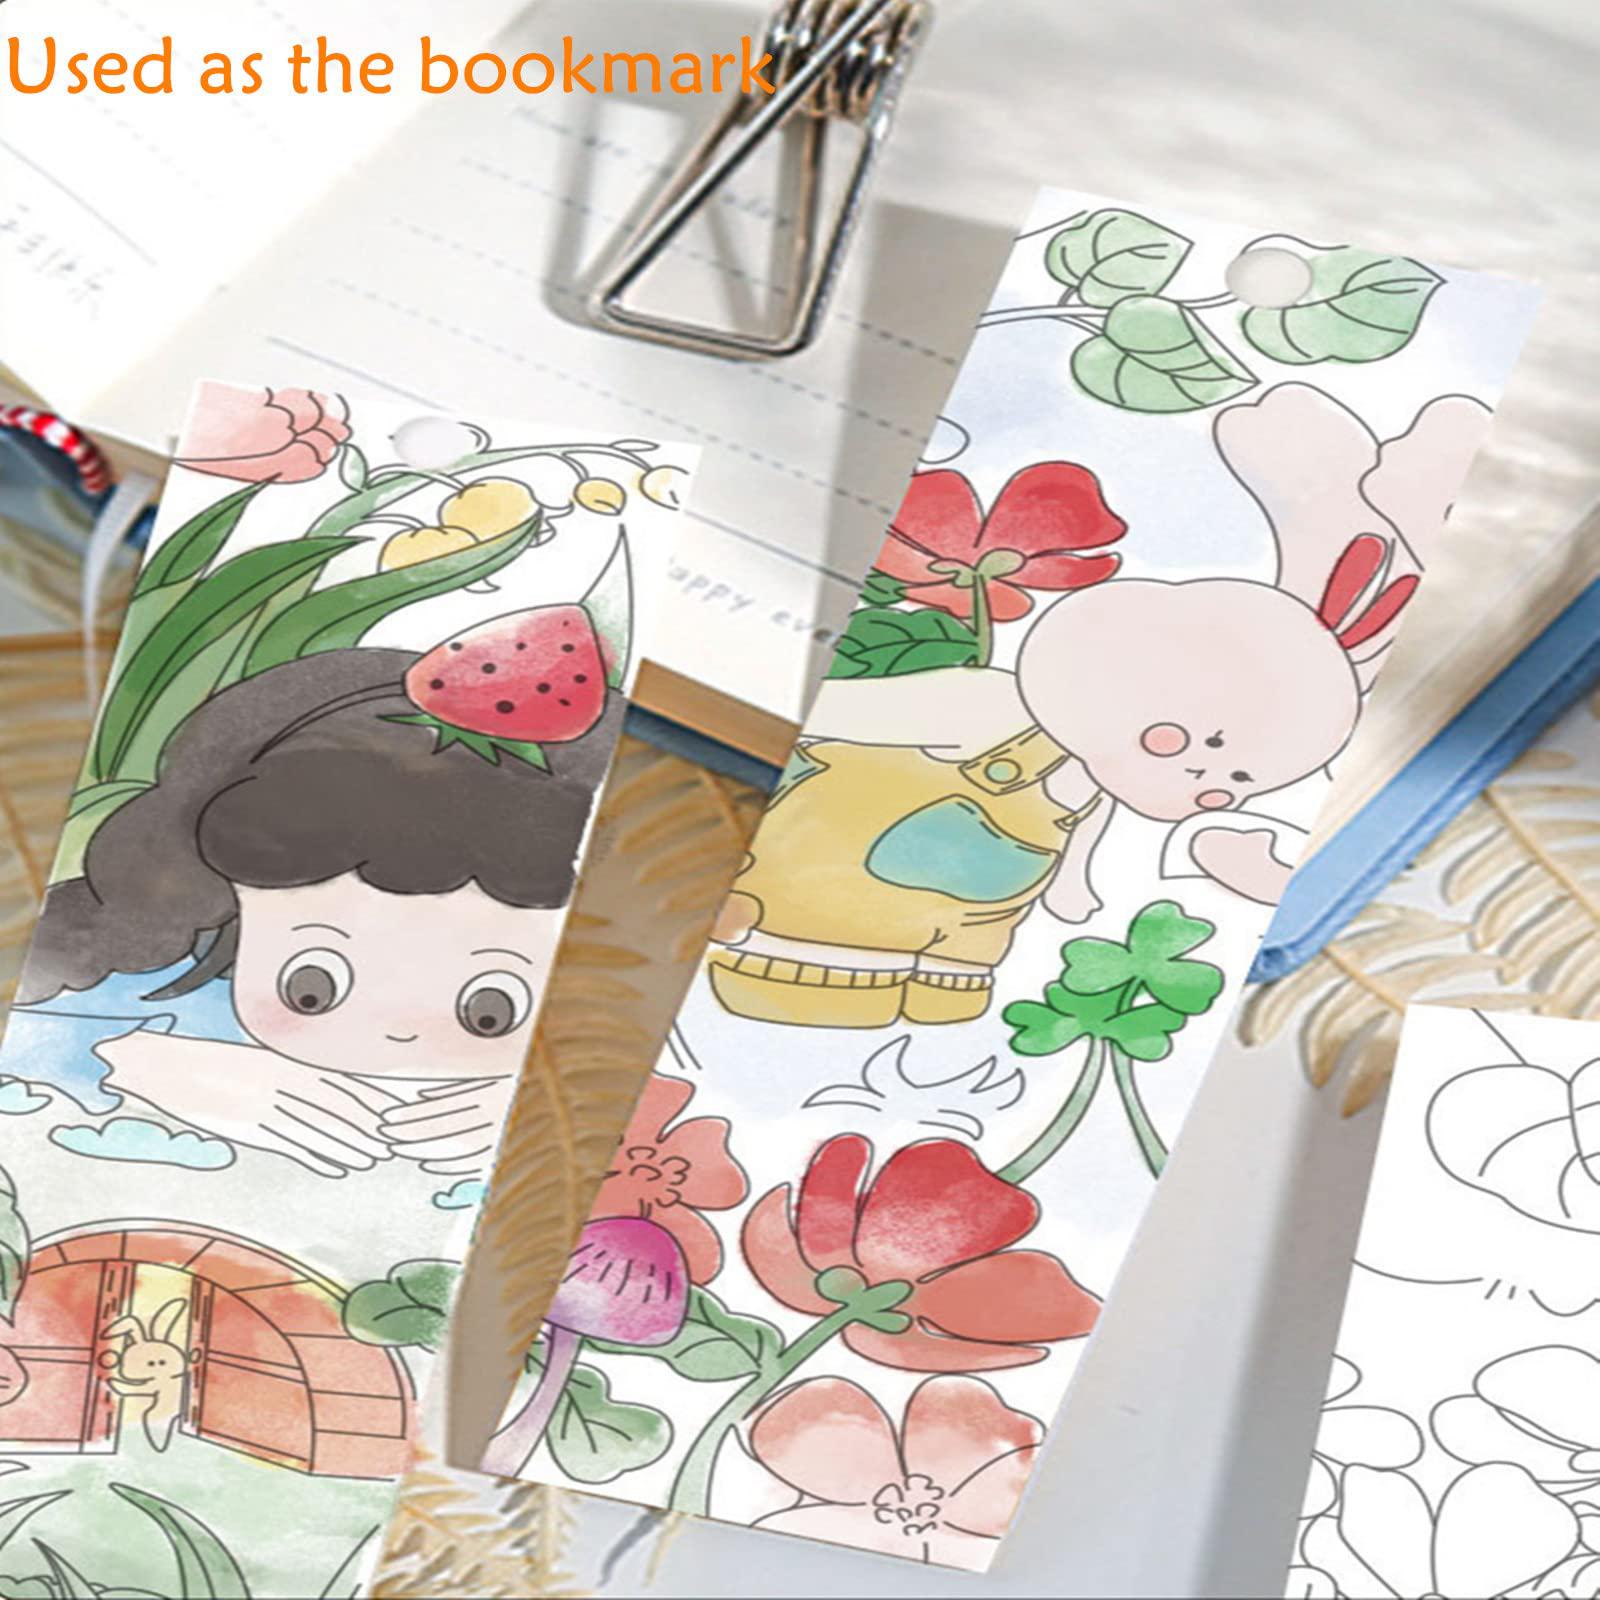 Yurlgst pocket watercolor painting book,3 pcs pocket watercolor book for  kids,diy travel pocket watercolor kit,improve your child's c